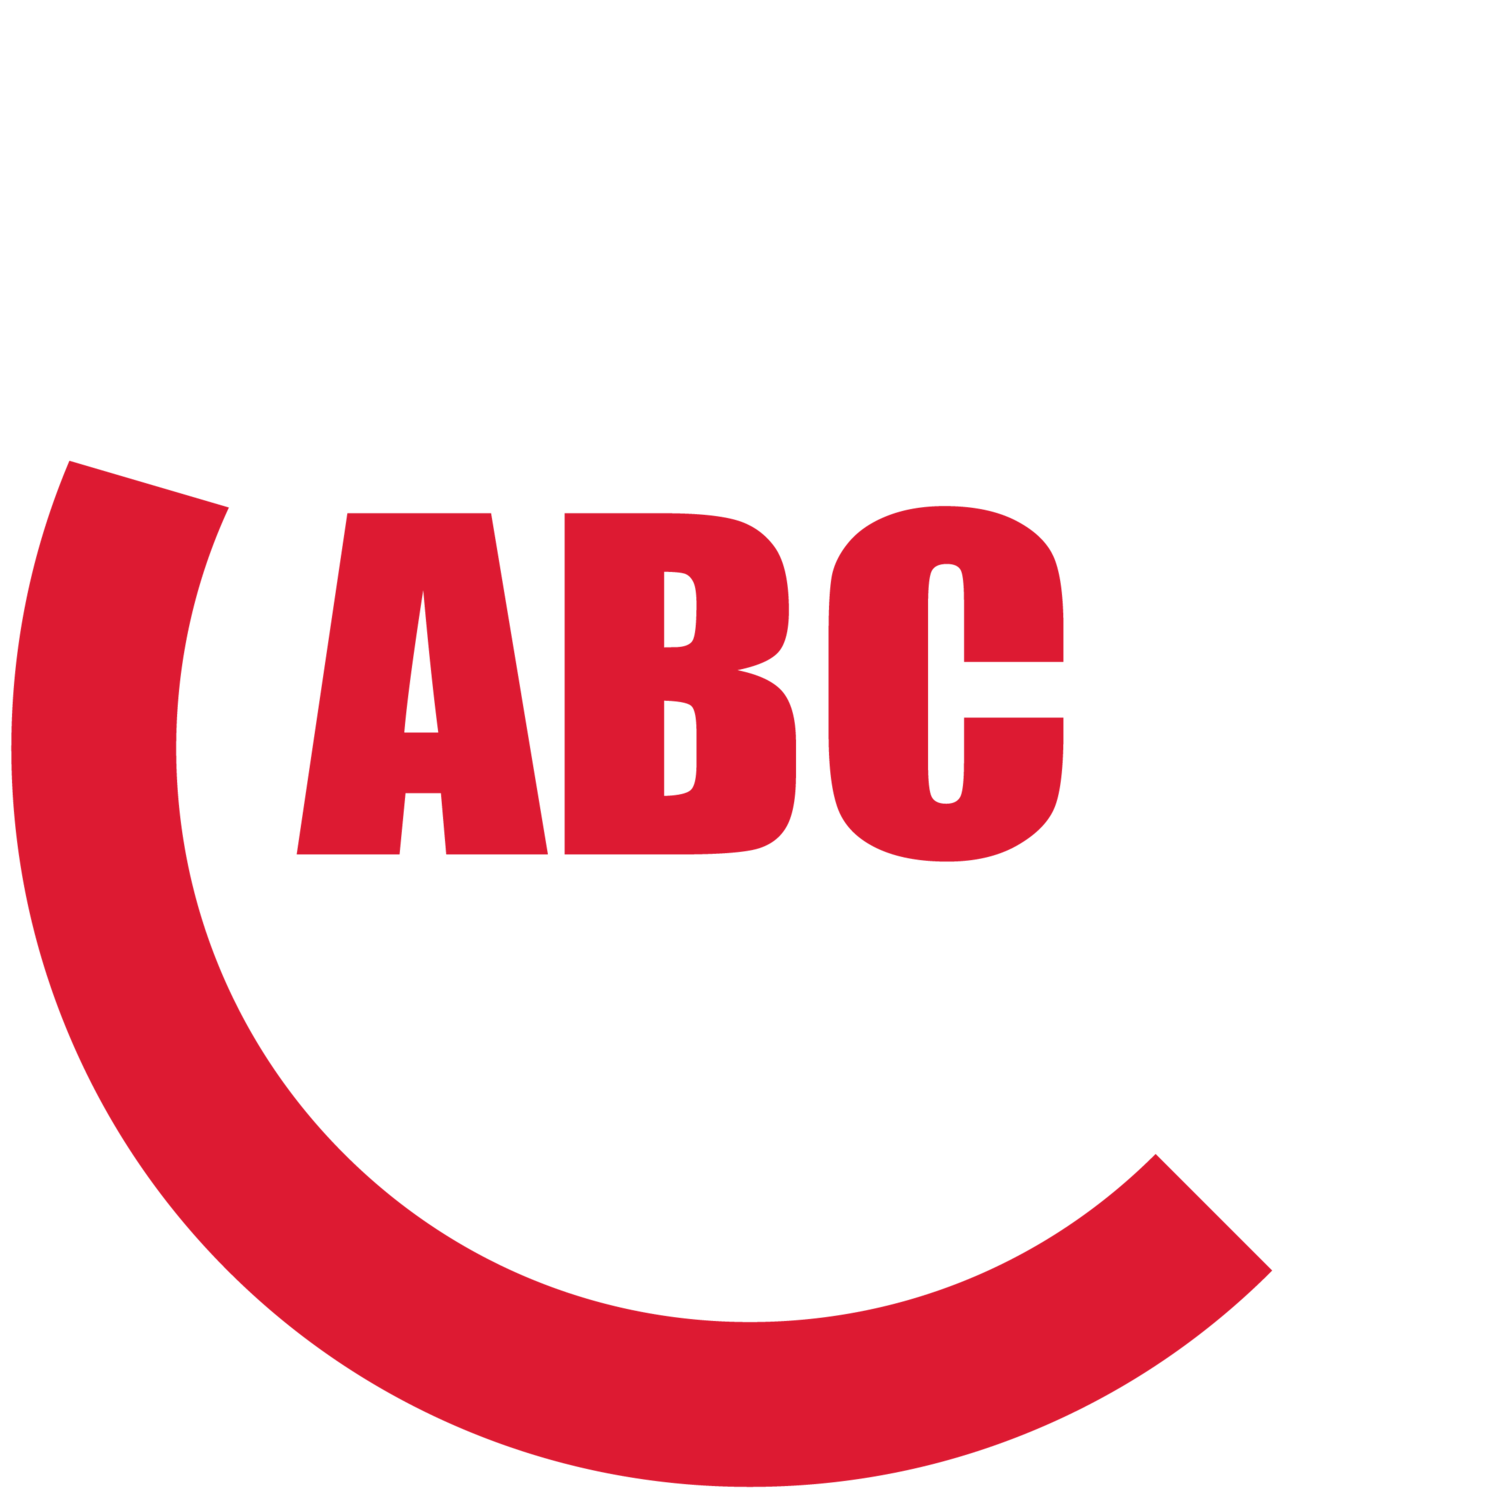 ABC Scaffolds